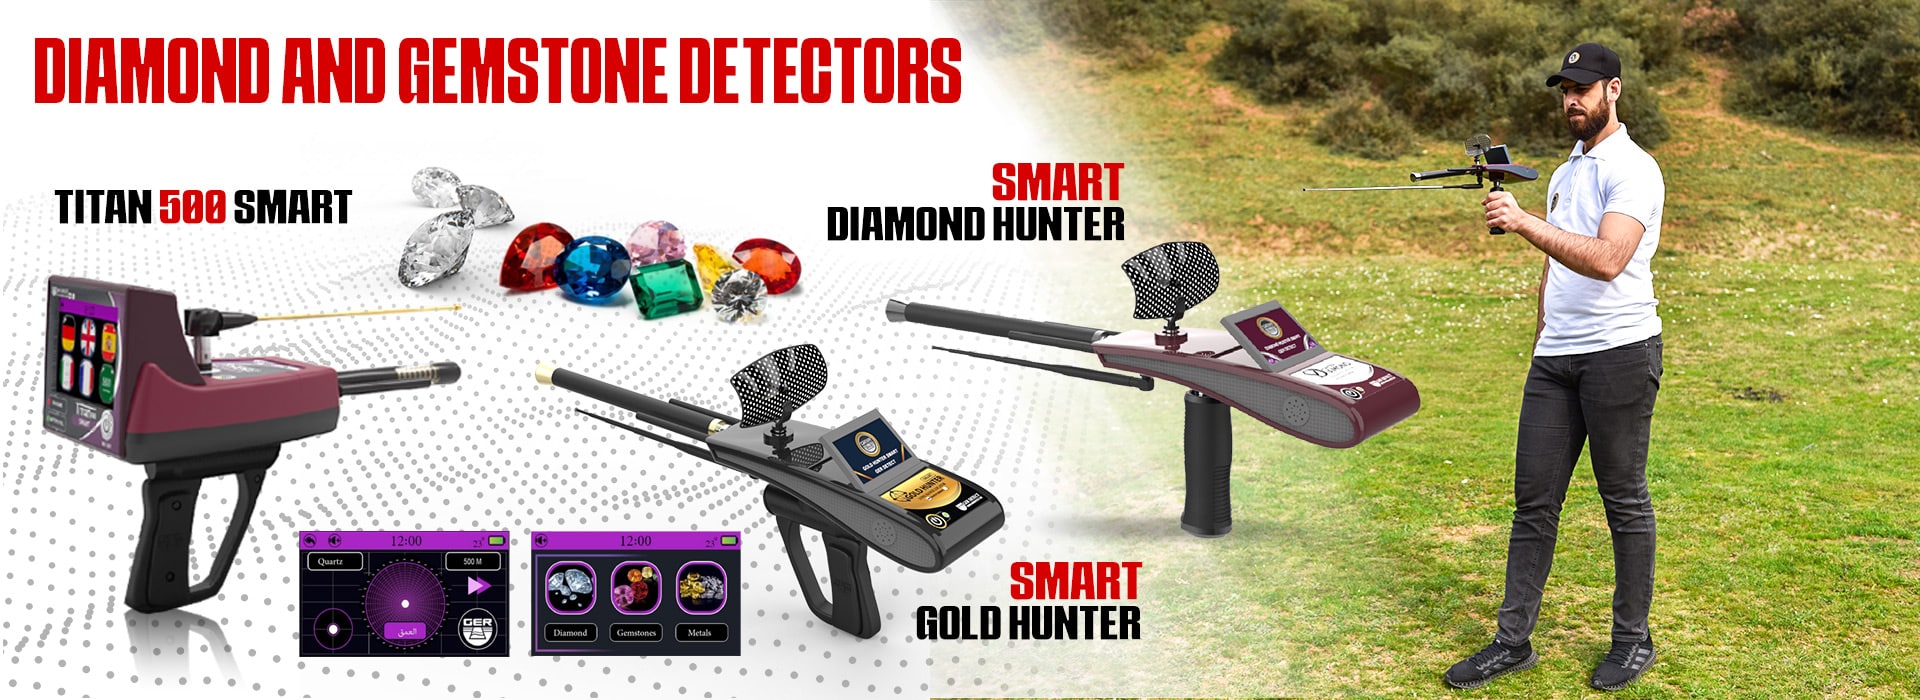 Diamond-and-gemstone-detectors